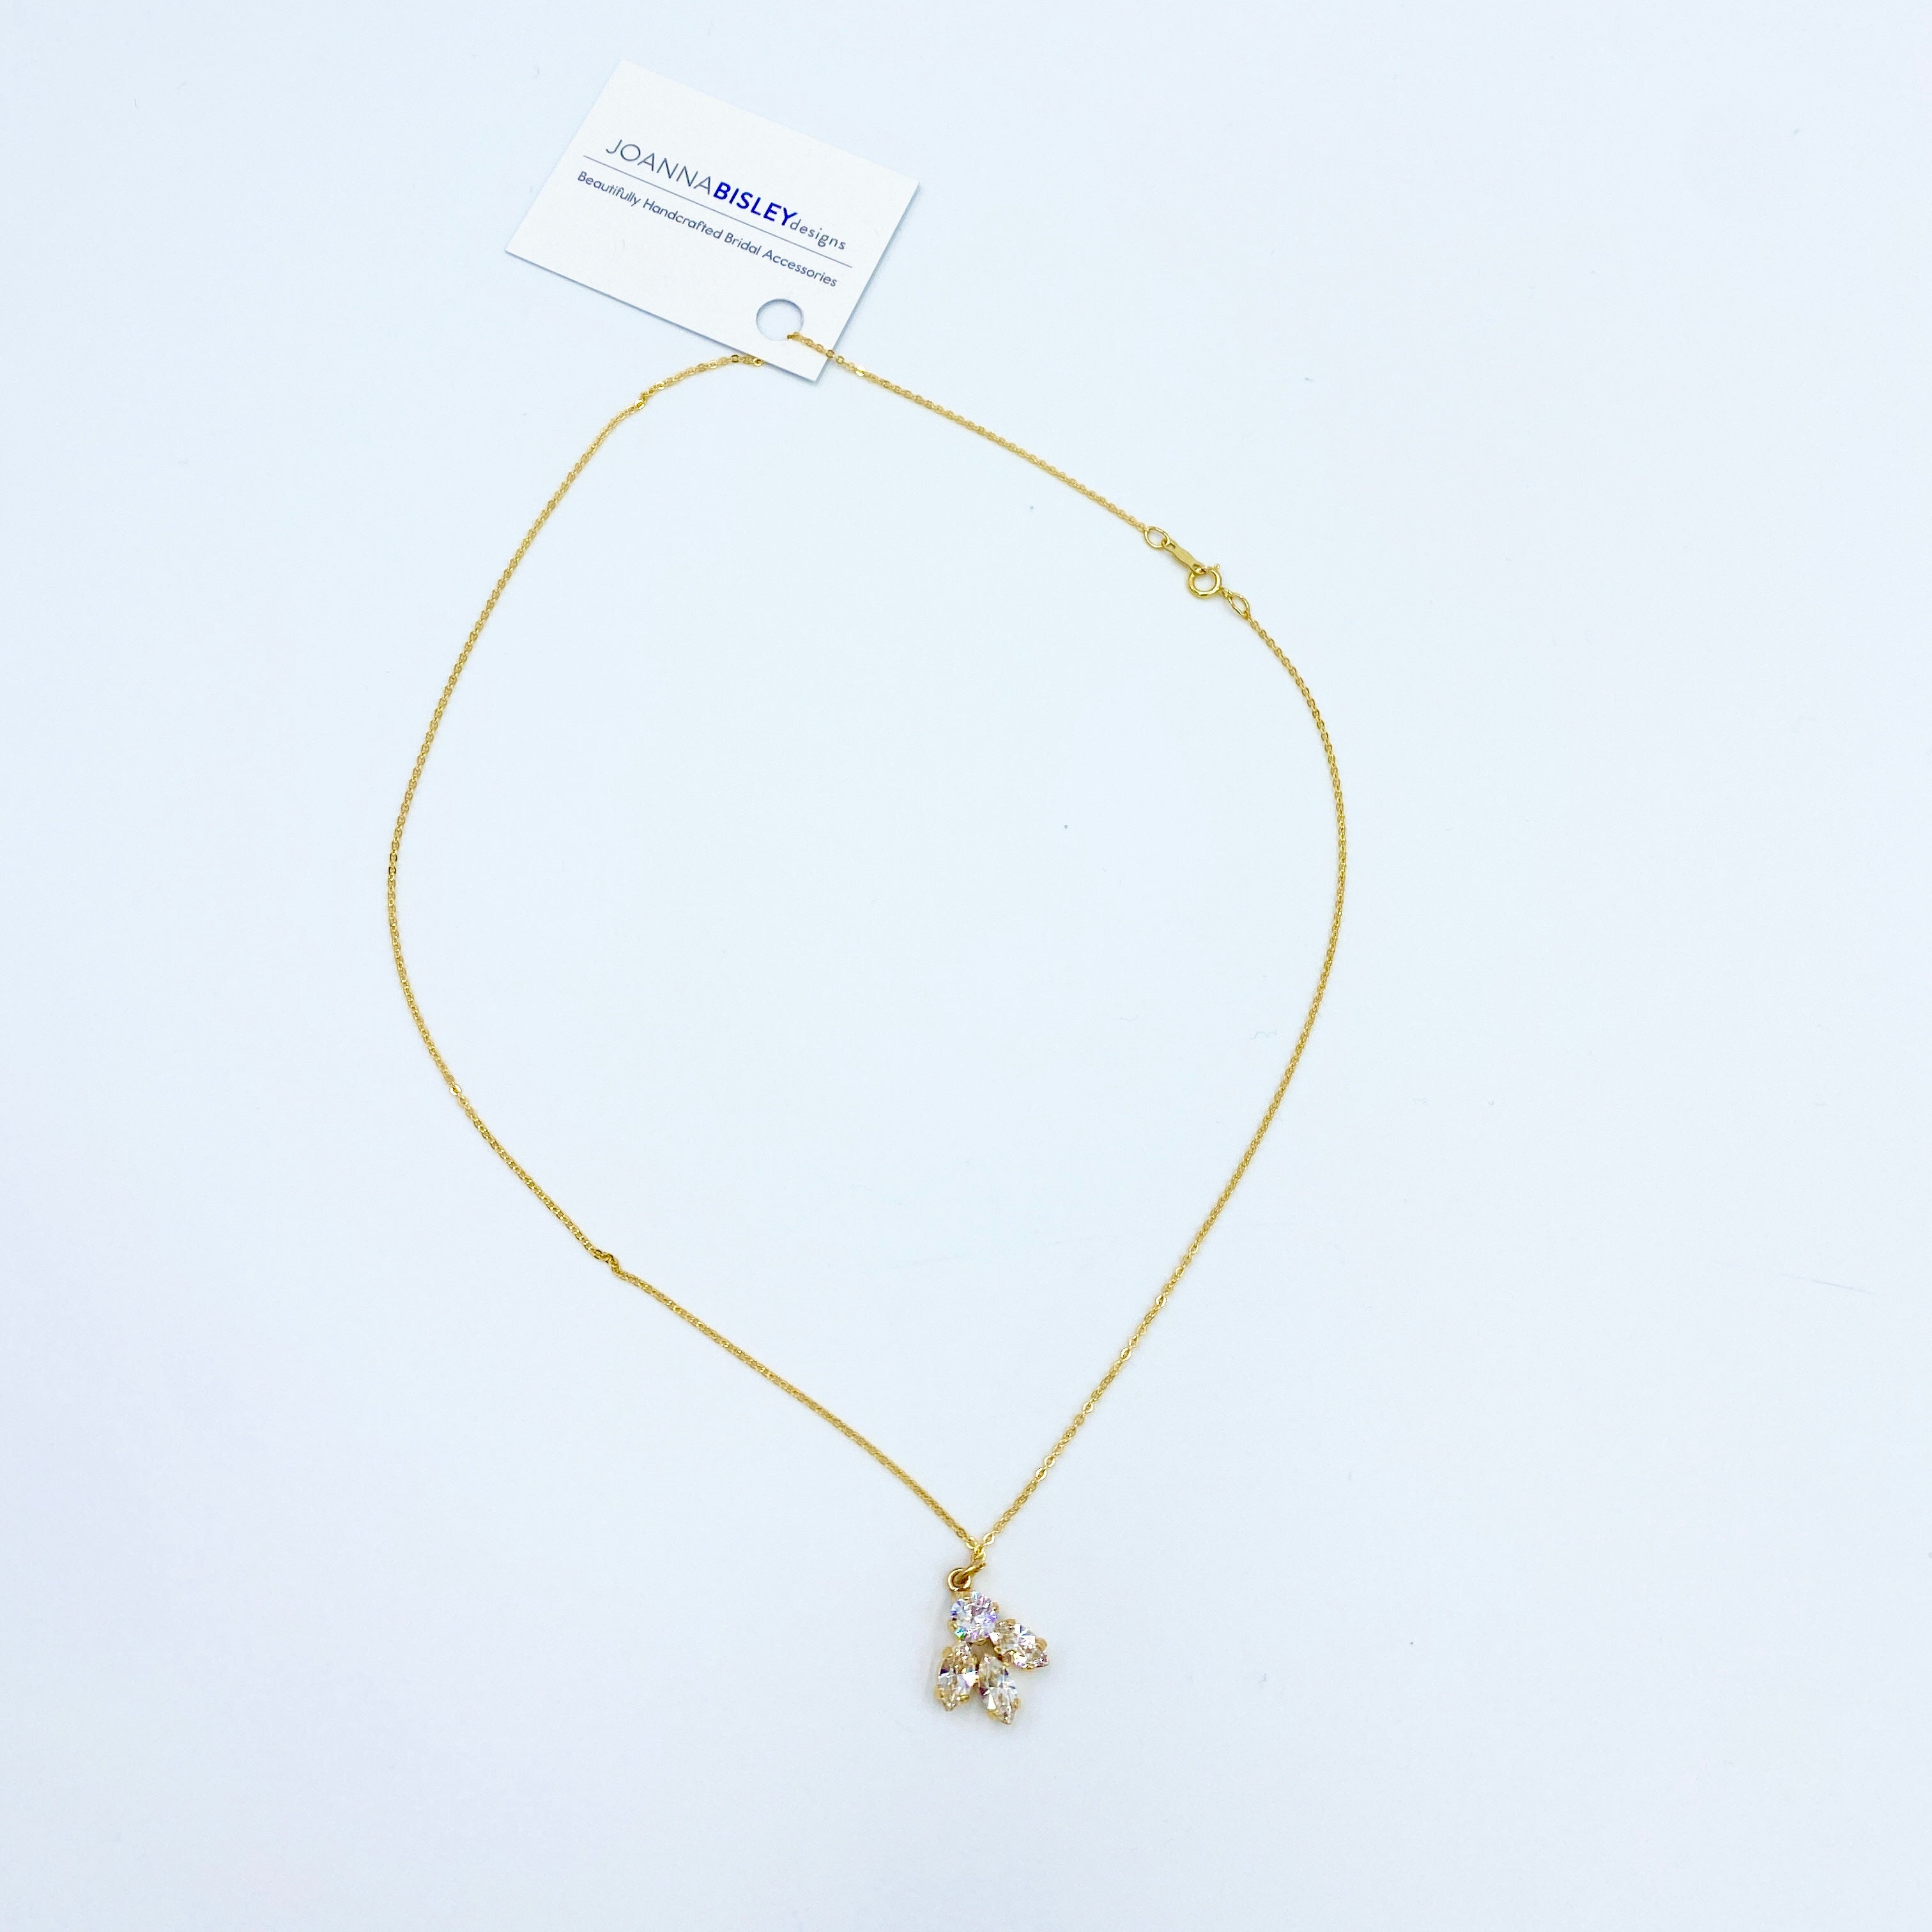 Joanna Bisley CLAUDIA Swarovski Crystal 14Kt Goldfill Necklace - 0